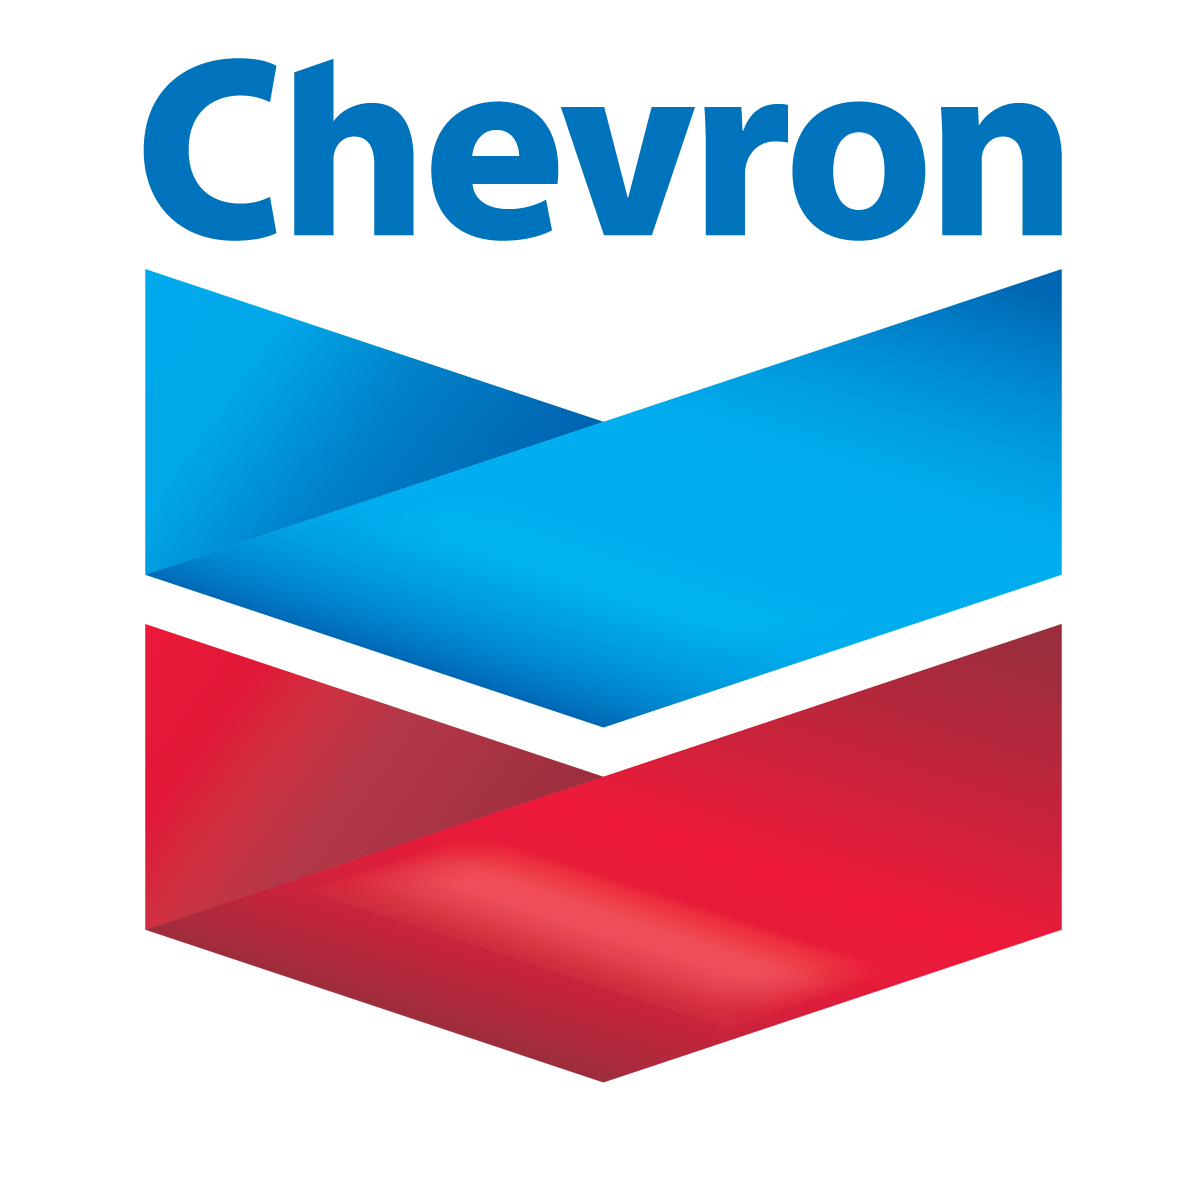 decorative: Chevron logo